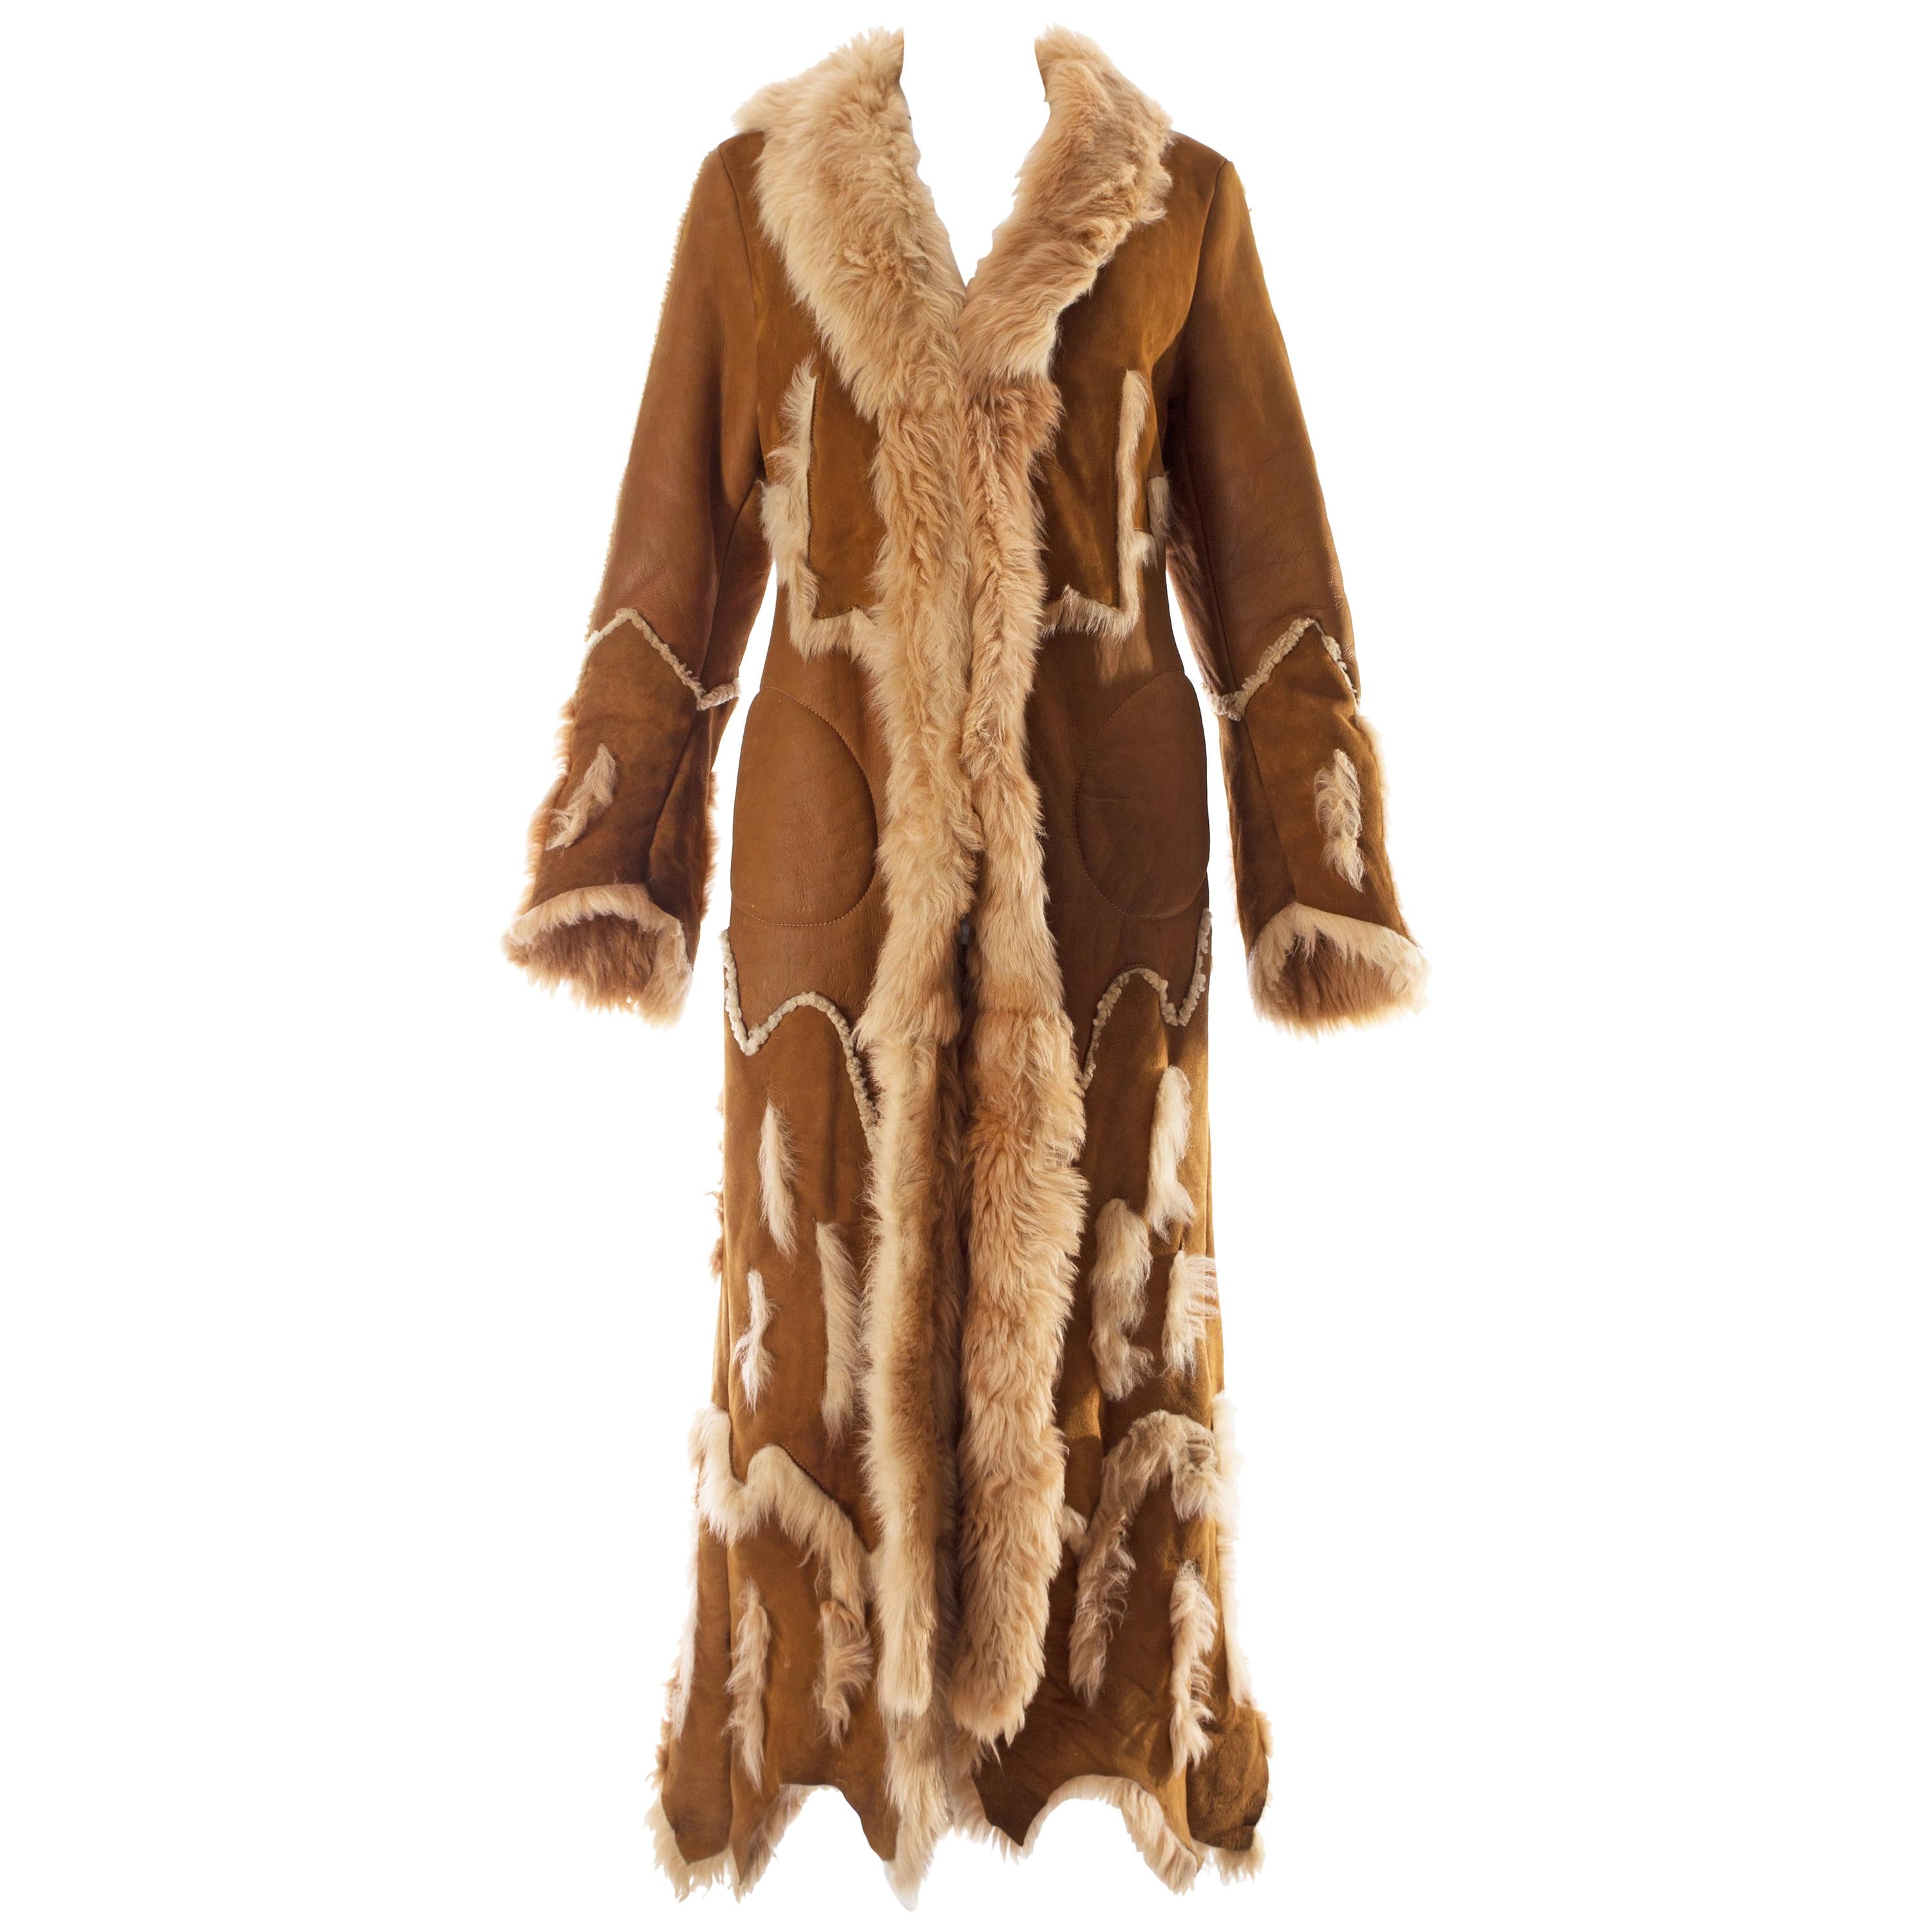 Alexander McQueen shearling sheepskin full length coat, A / W 1996